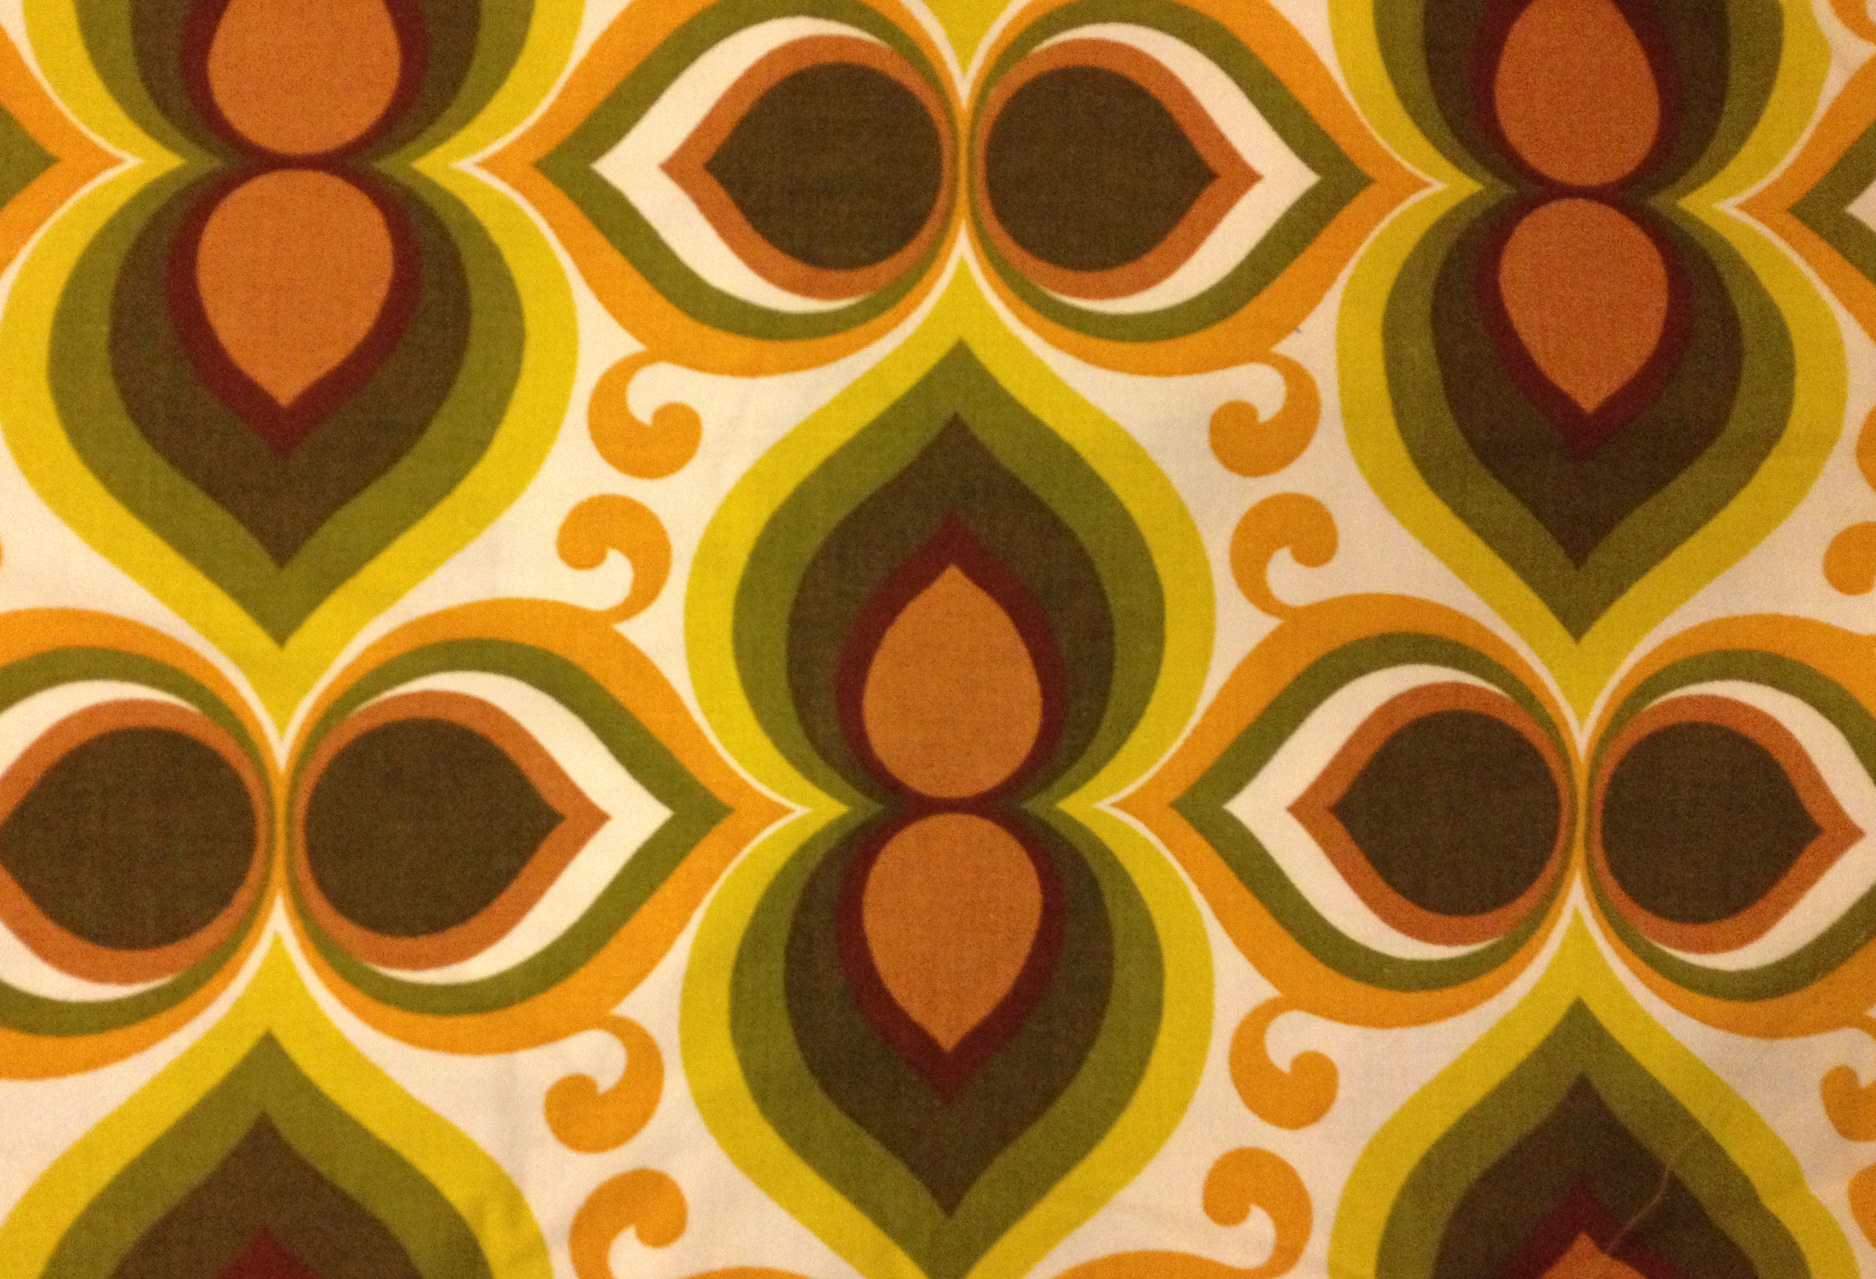 60s style wallpaper,pattern,orange,yellow,green,symmetry